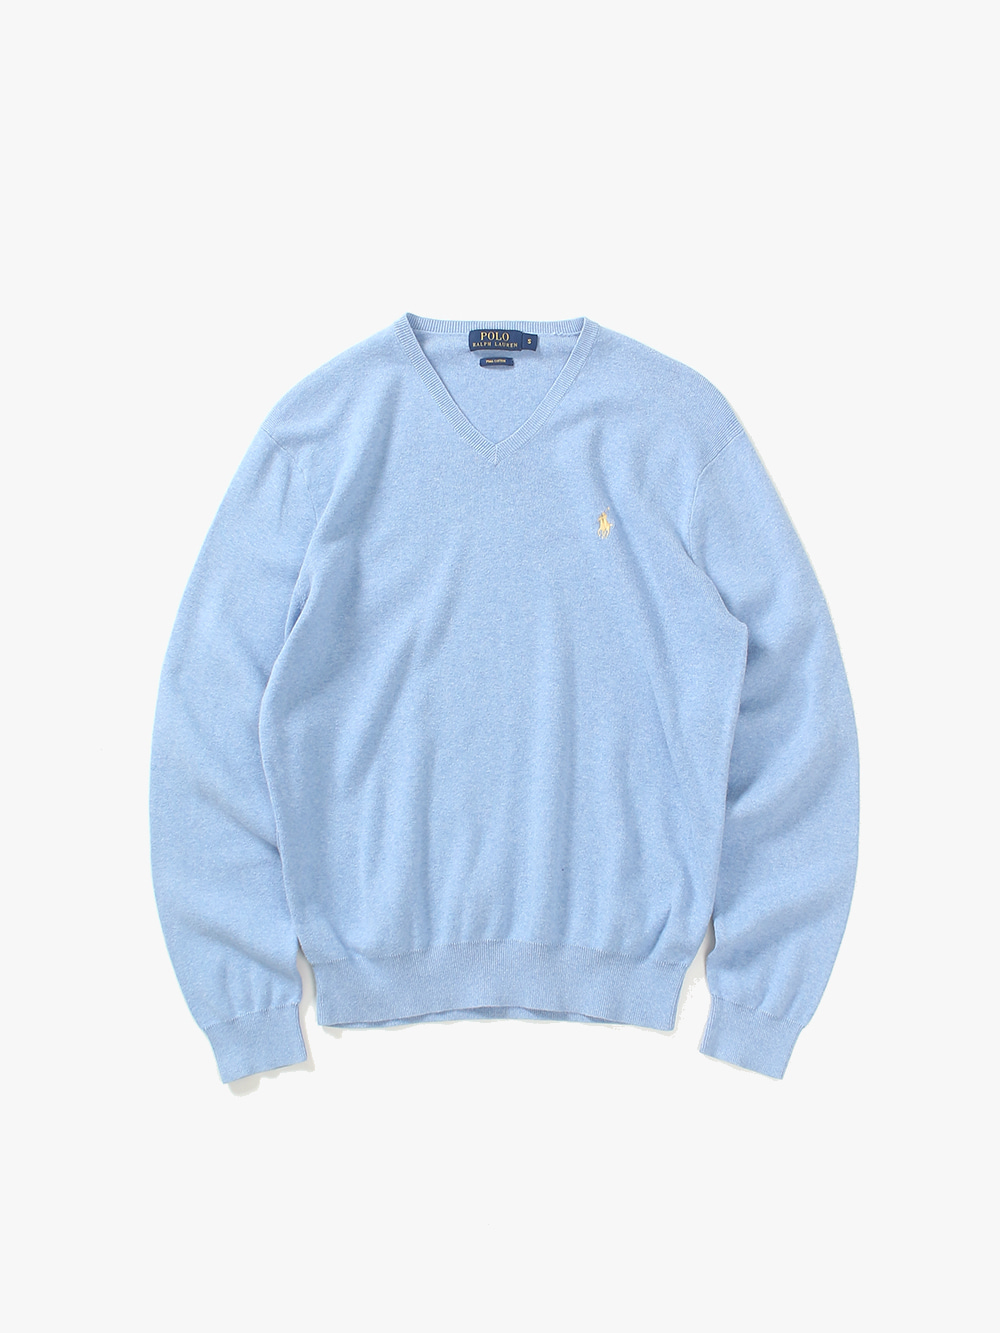 [ S ] Polo Ralph Lauren Sweater (6389)